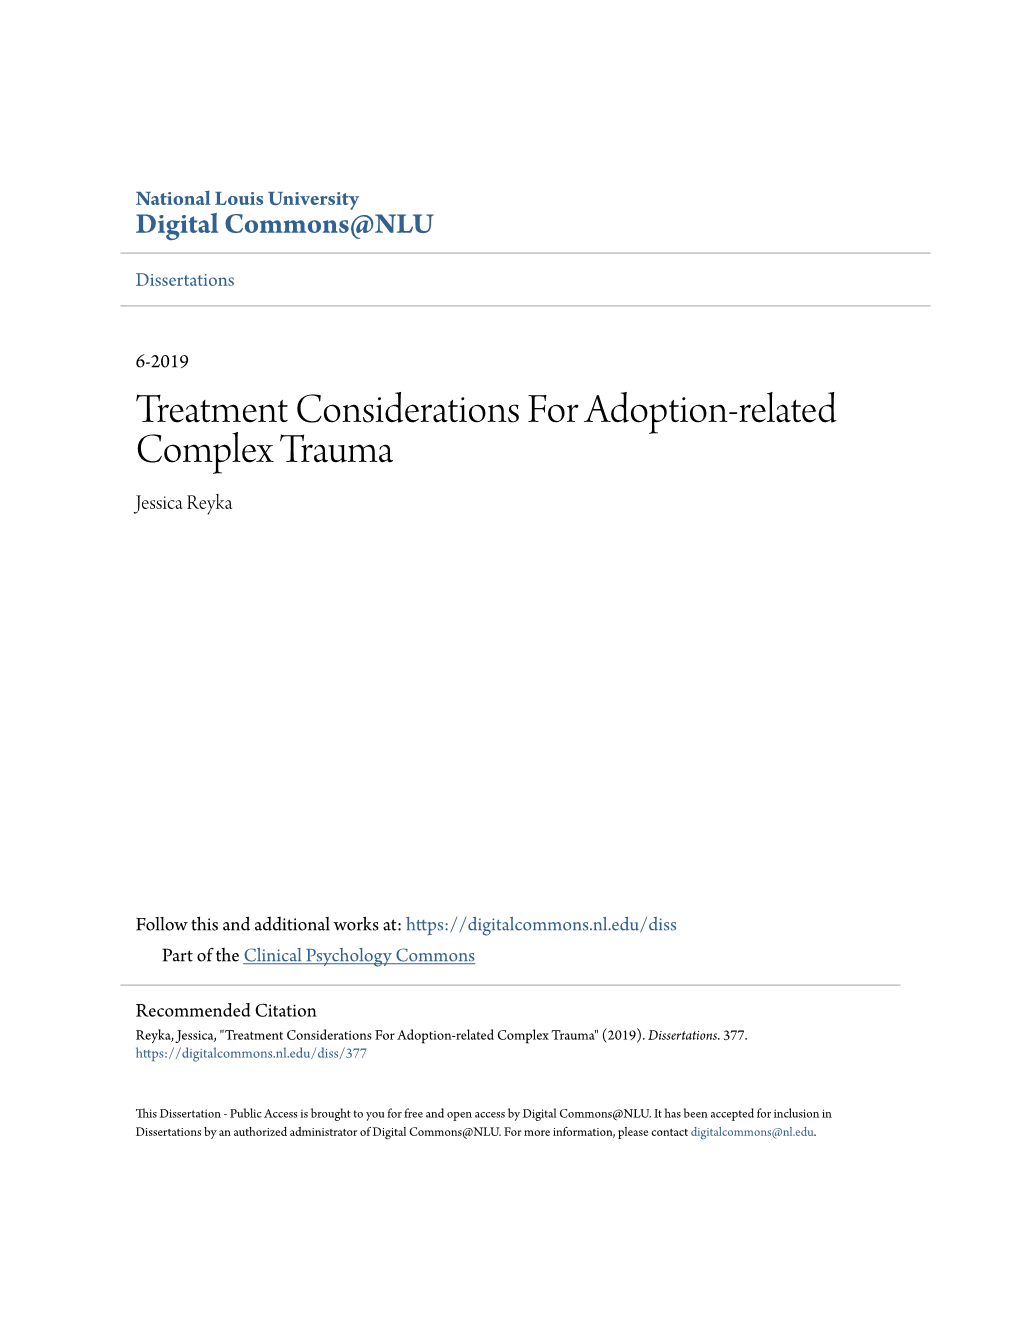 Treatment Considerations for Adoption-Related Complex Trauma Jessica Reyka